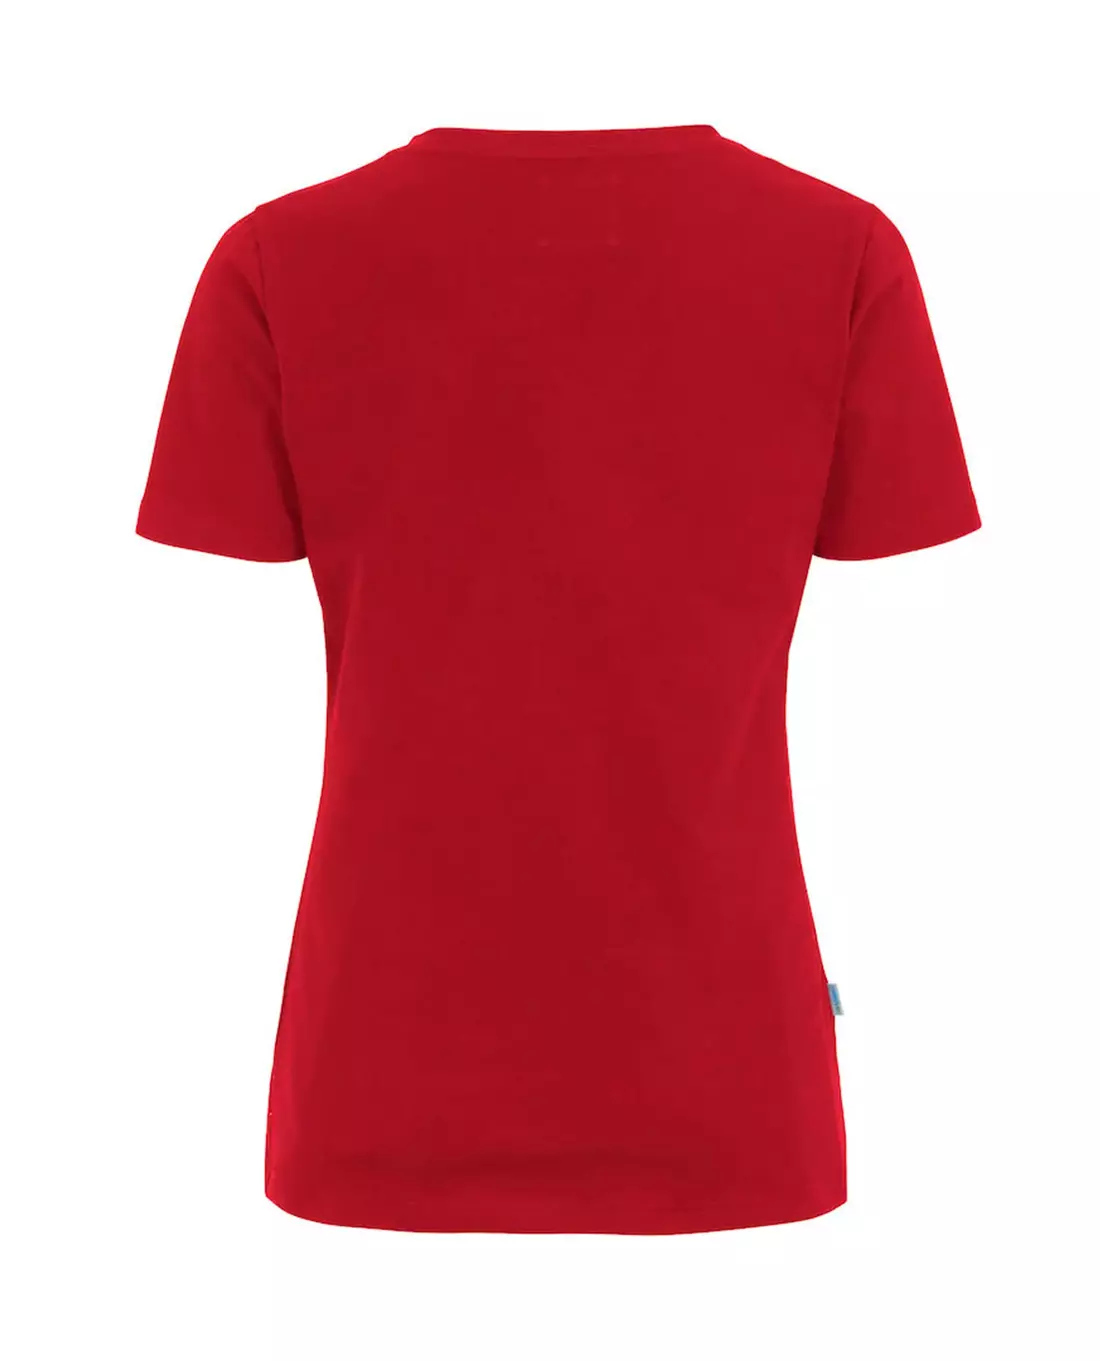 Cottover Naisten stretch t-paita, Punainen